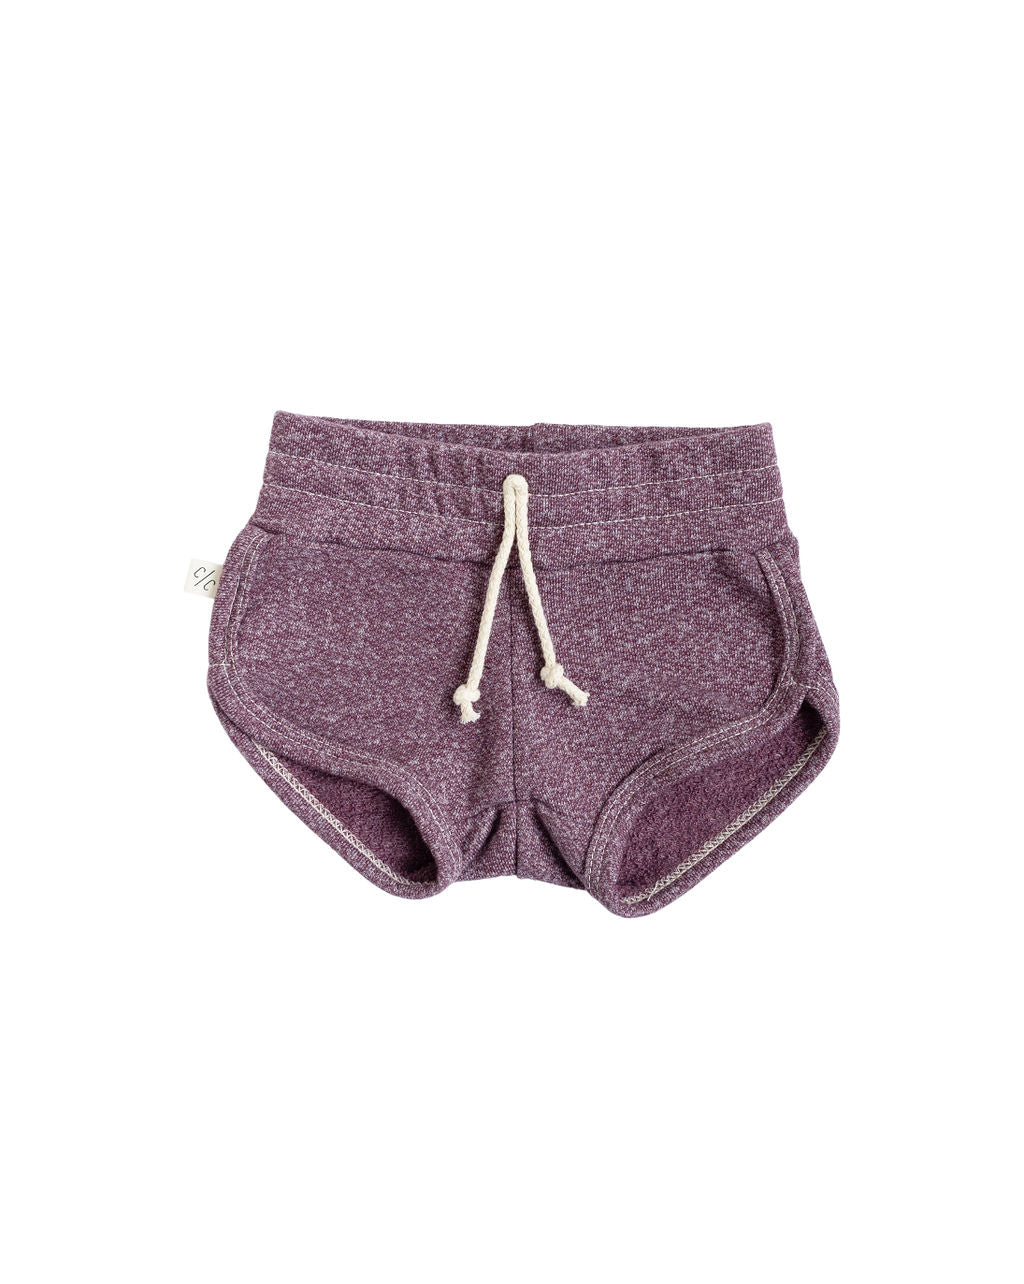 track shorts - purple heather